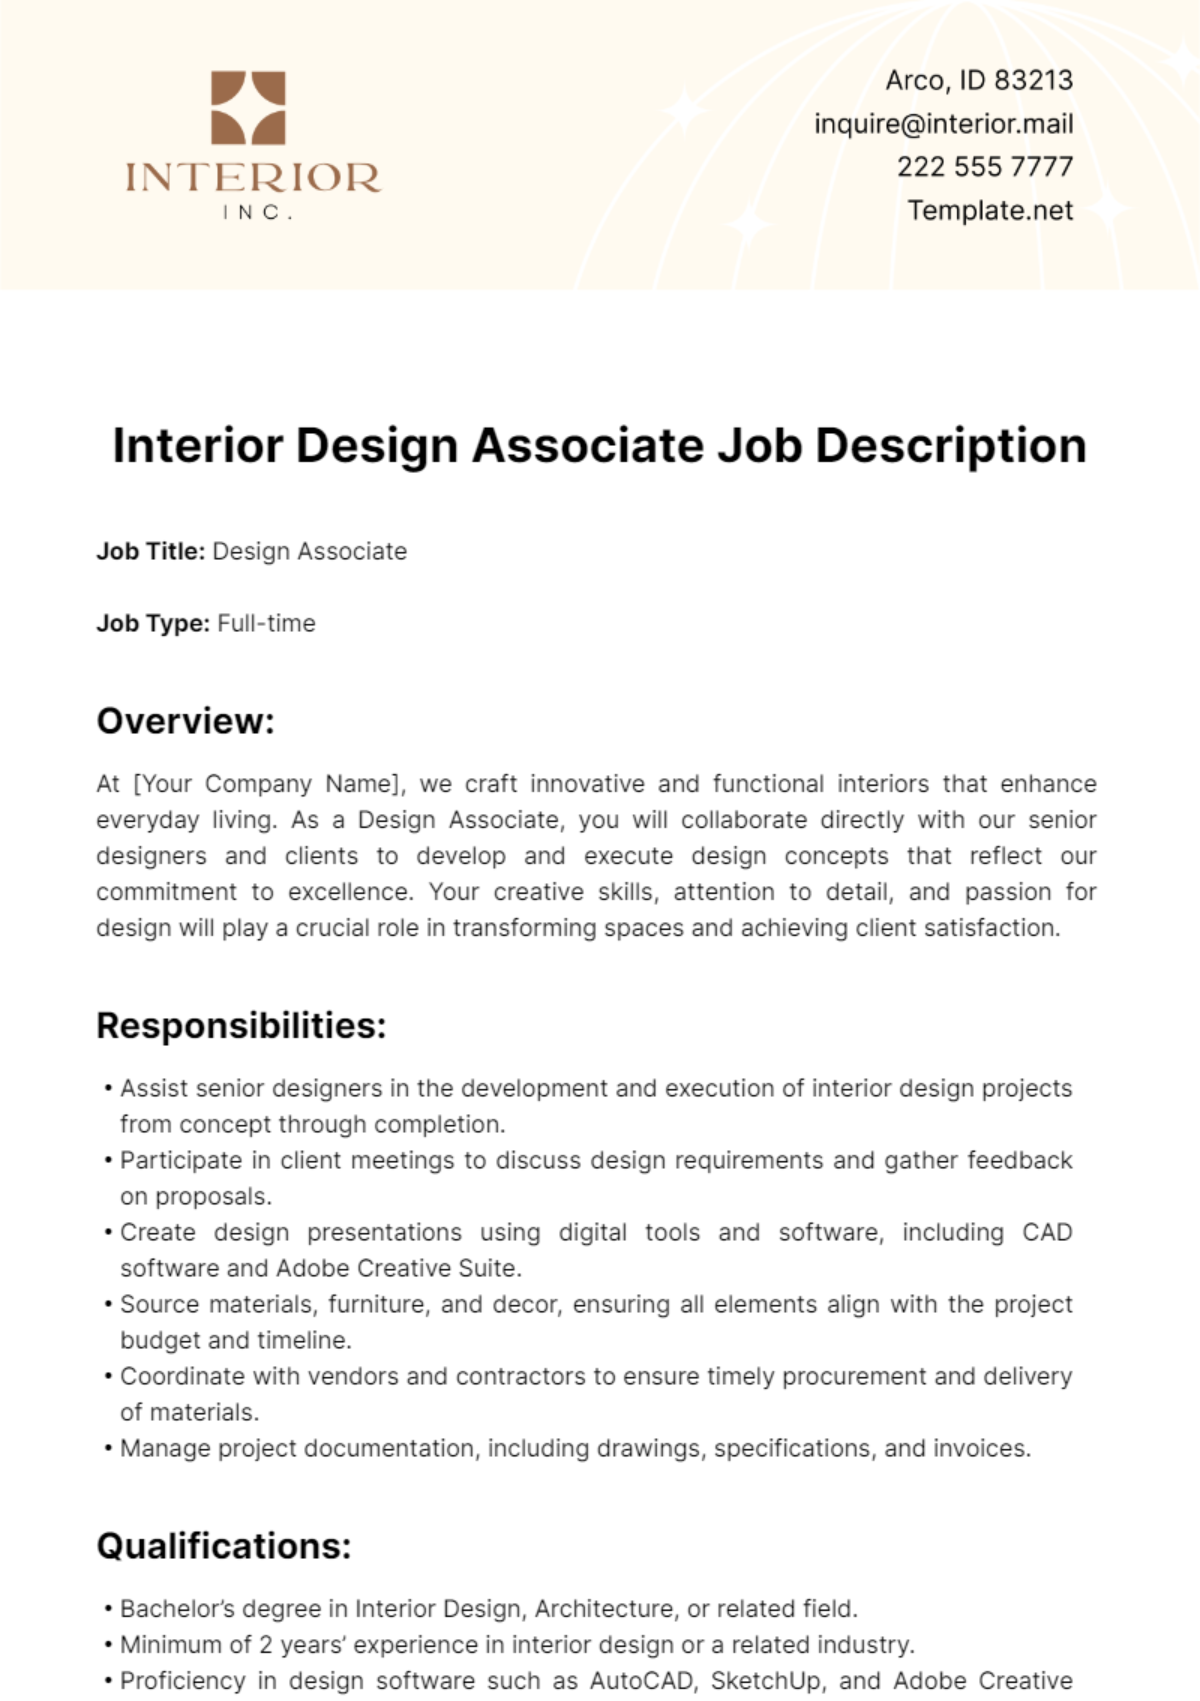 Free Interior Design Associate Job Description Template